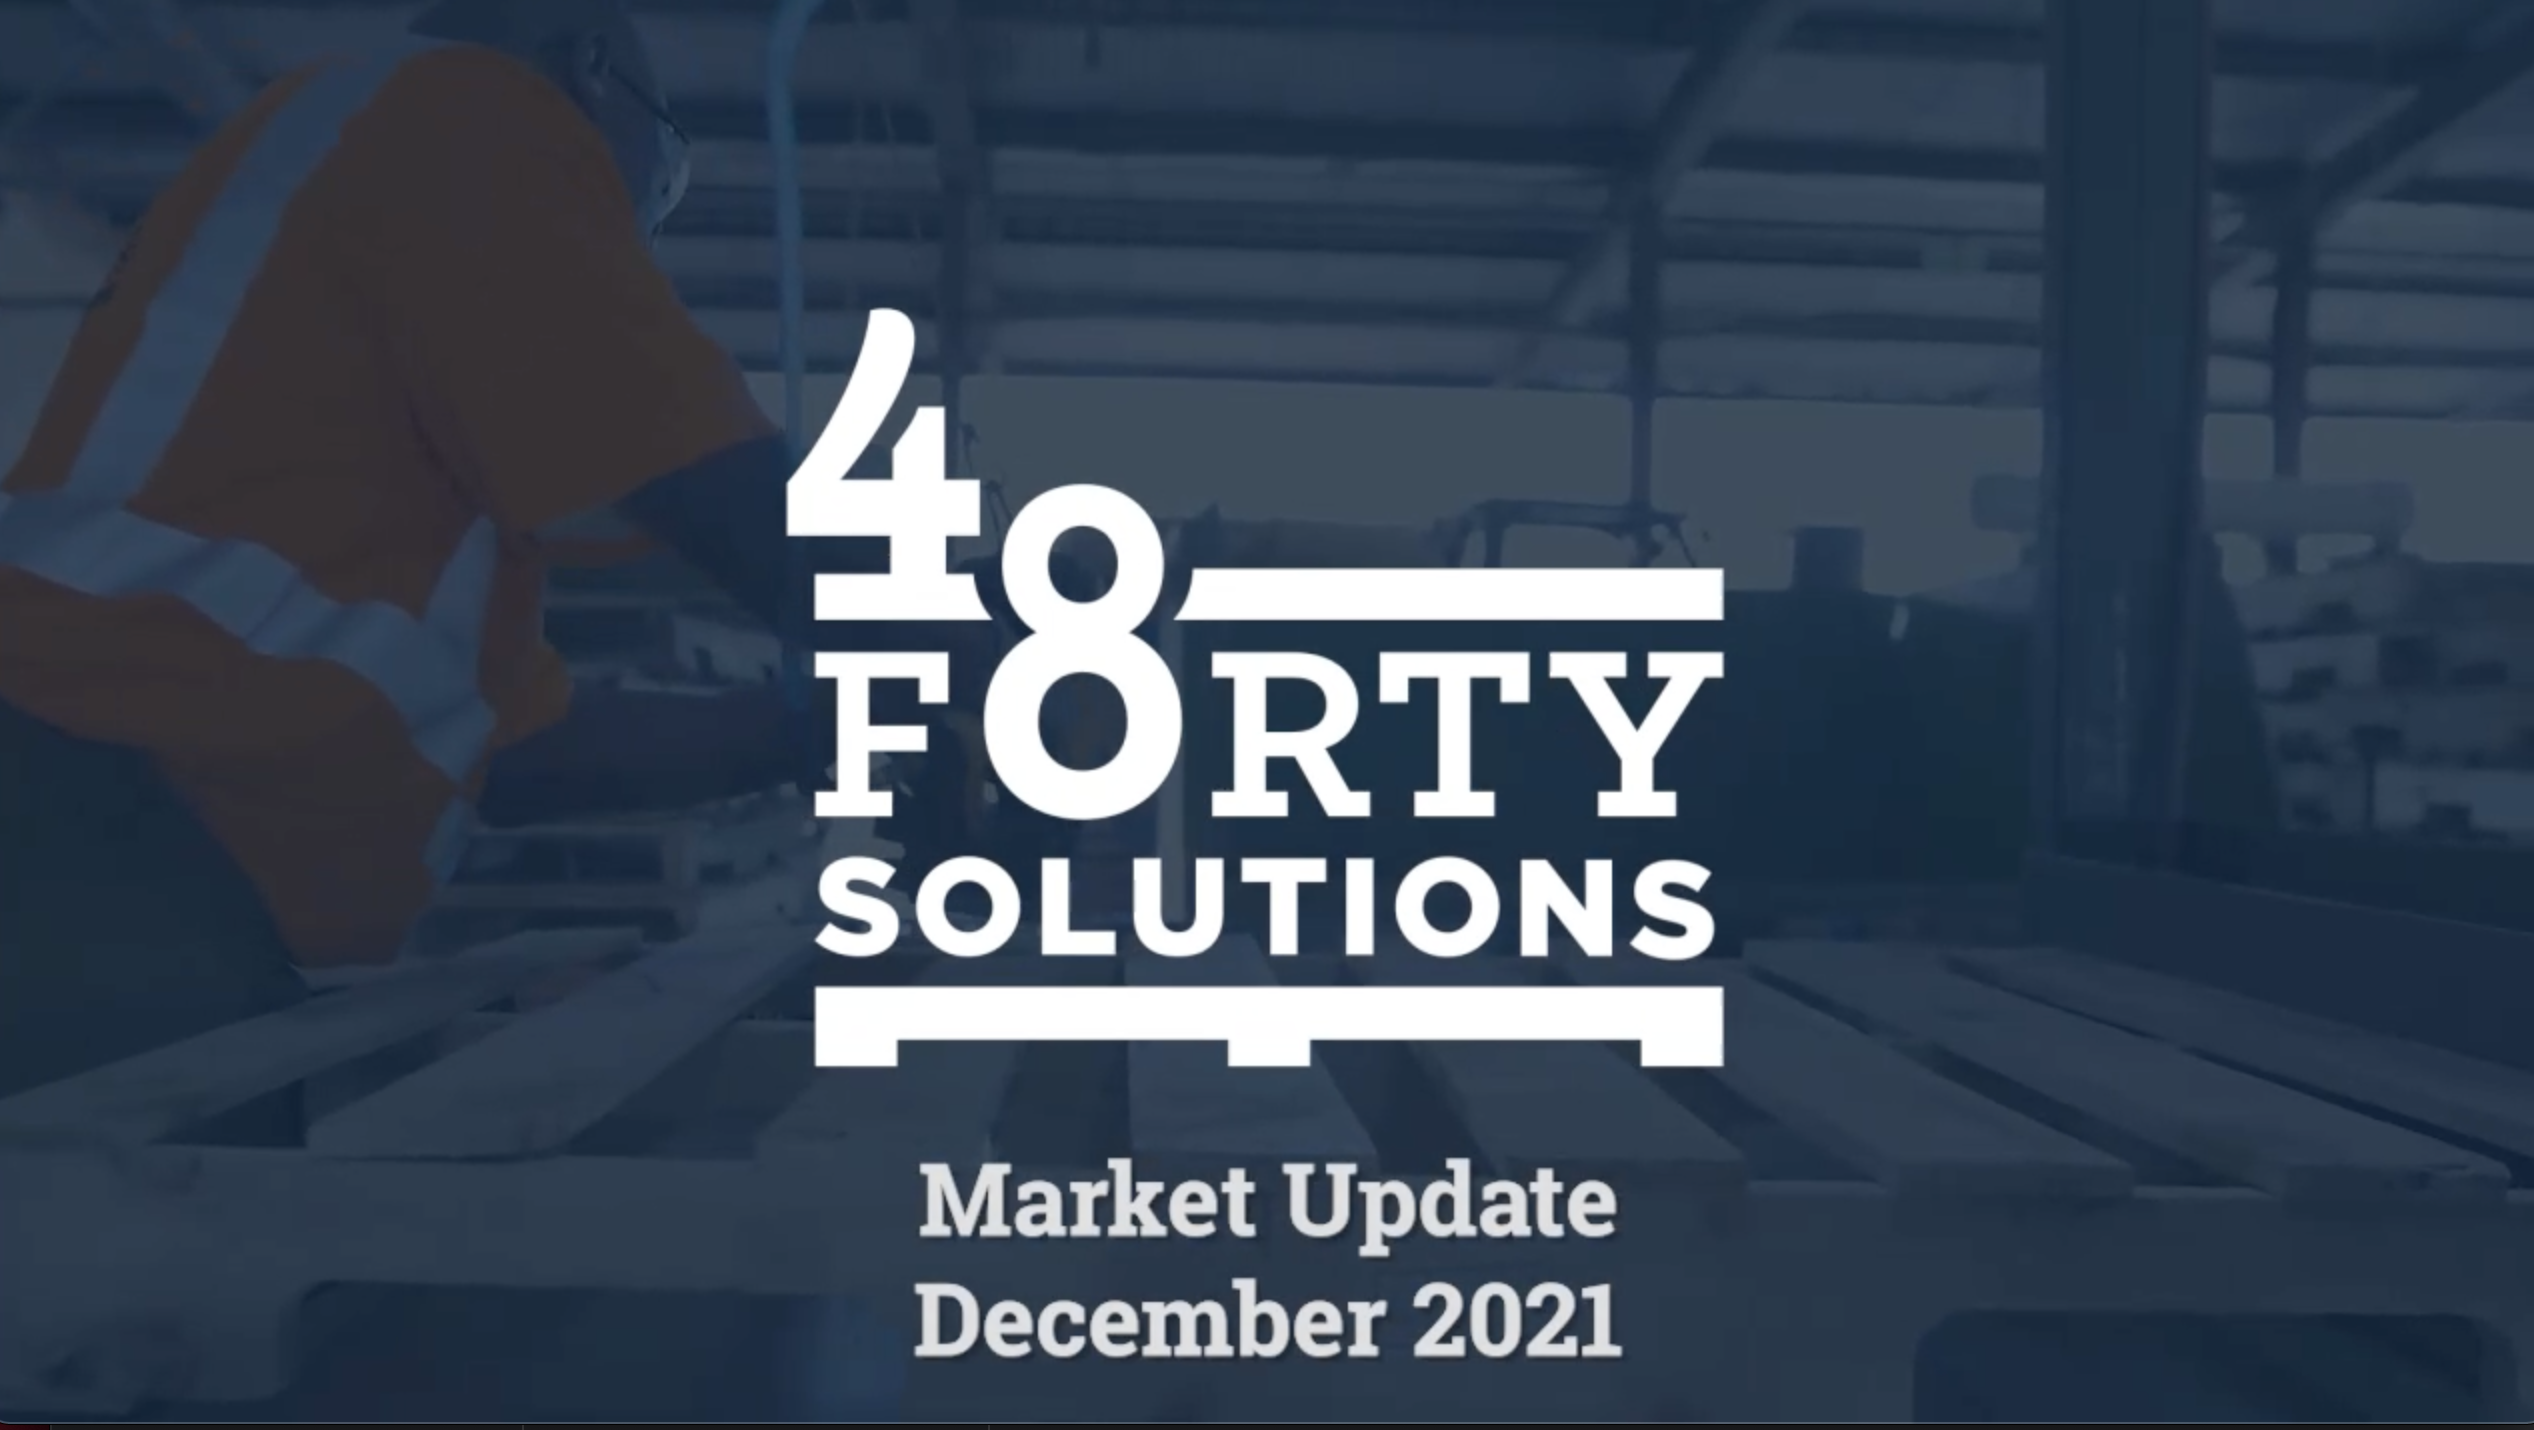 Dec 2021 Market Update - captioned